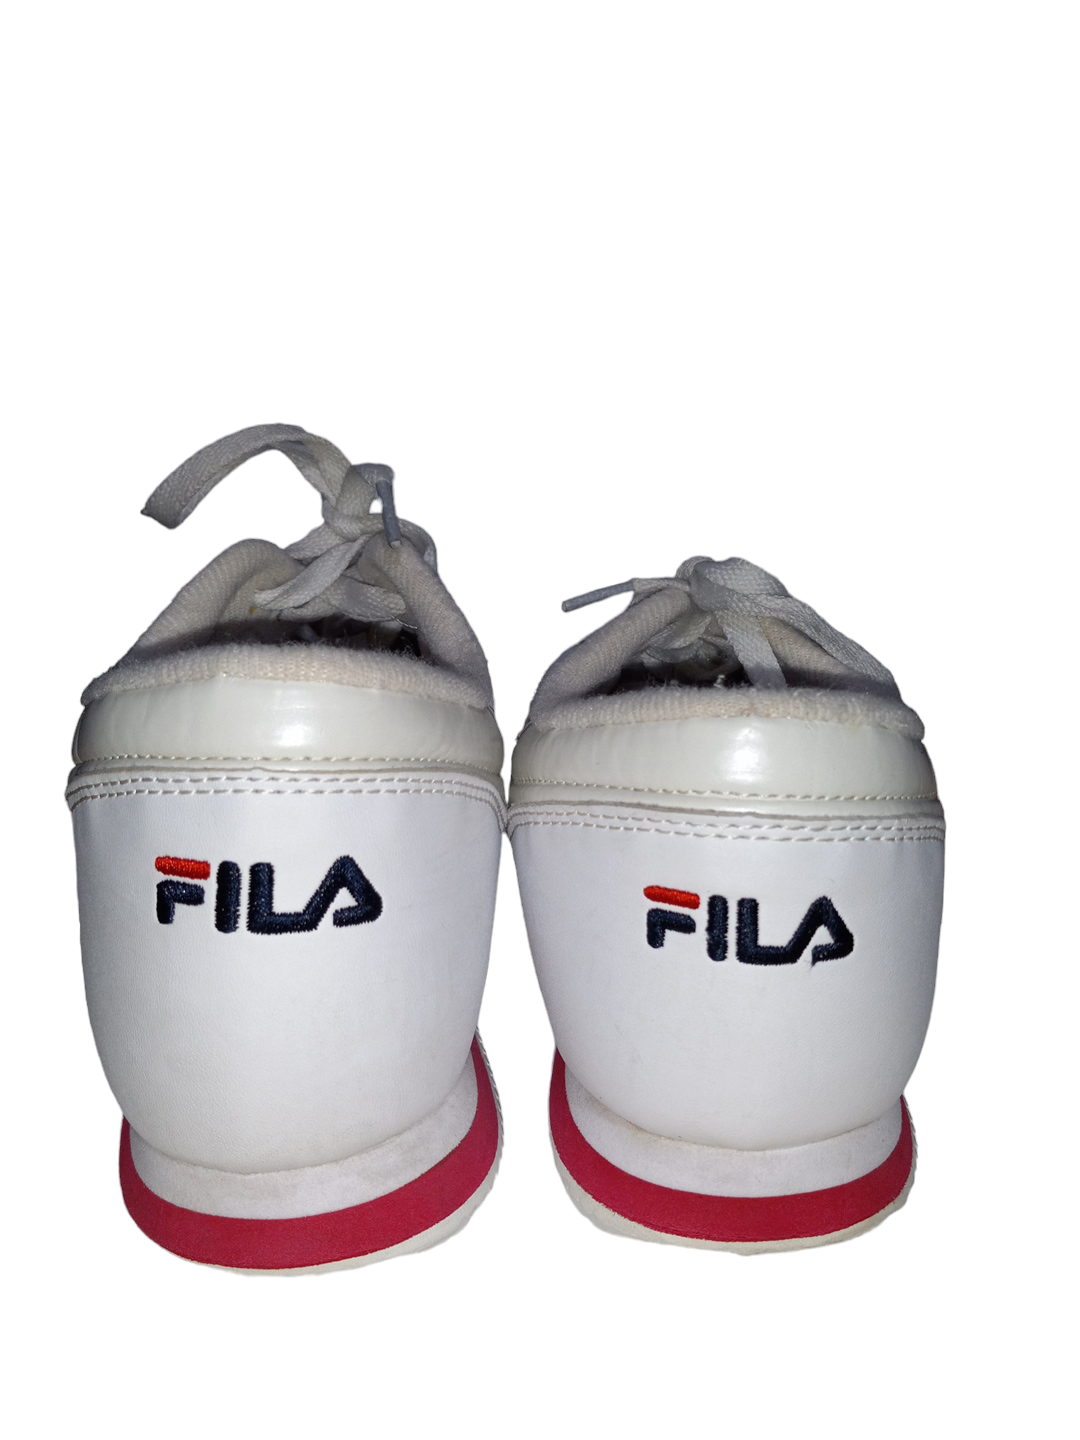 White Shoes Sneakers Fila, Size 8